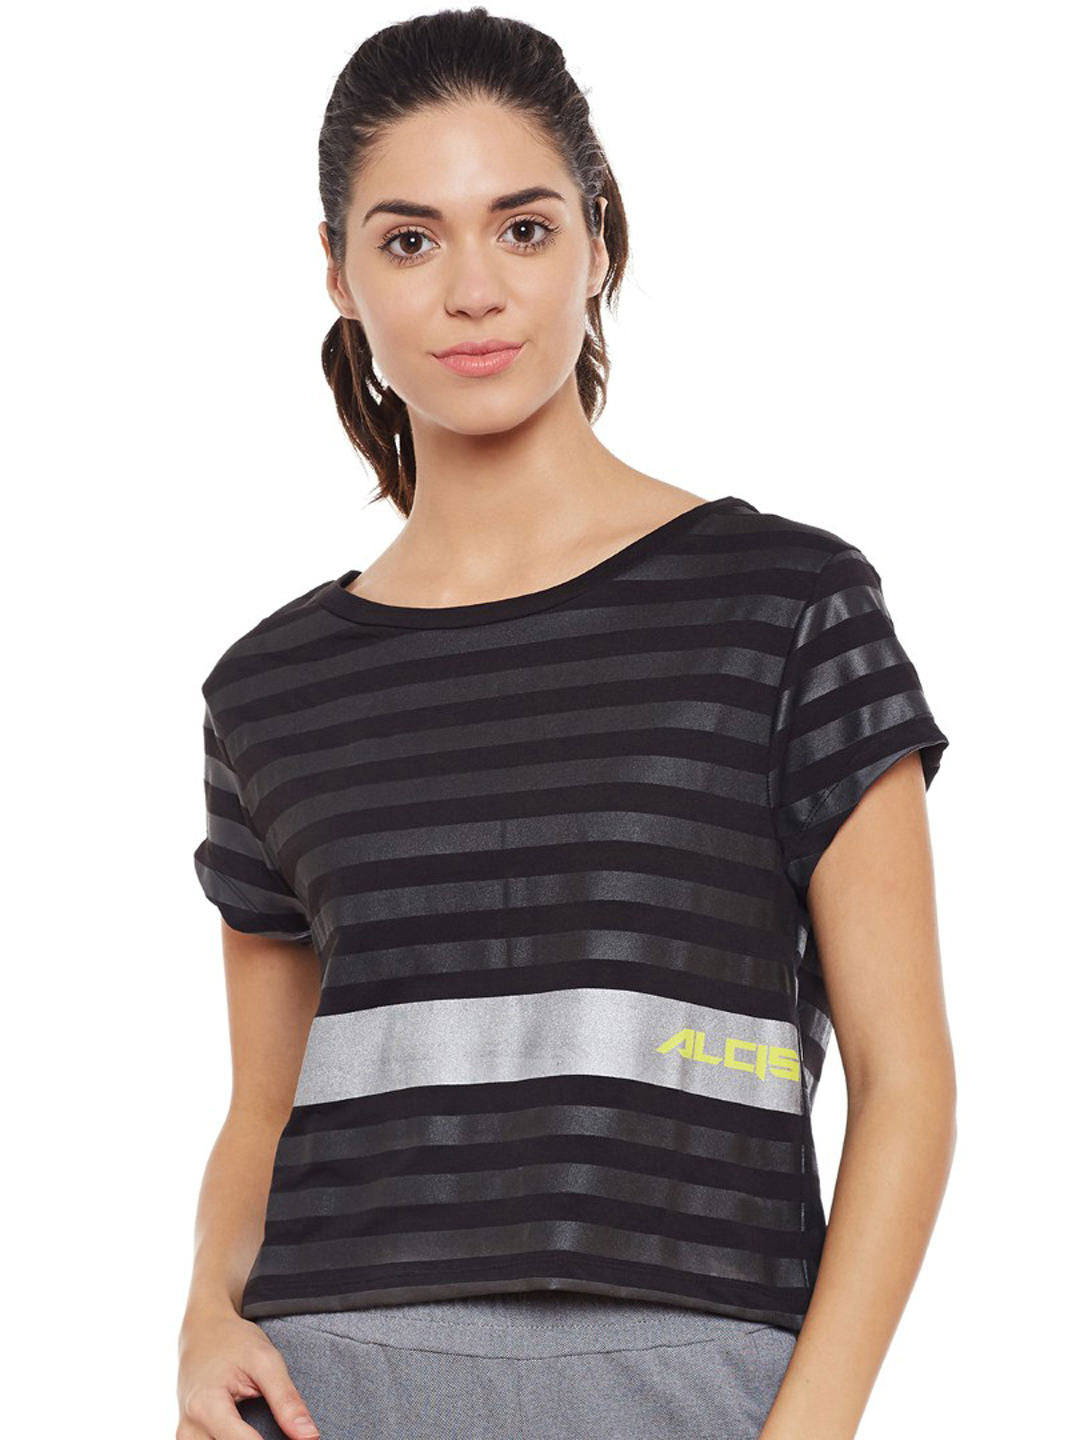 Alcis Women Black Striped Round Neck Sports T-shirt AKTRWTE1180303 AKTRWTE1180303-S